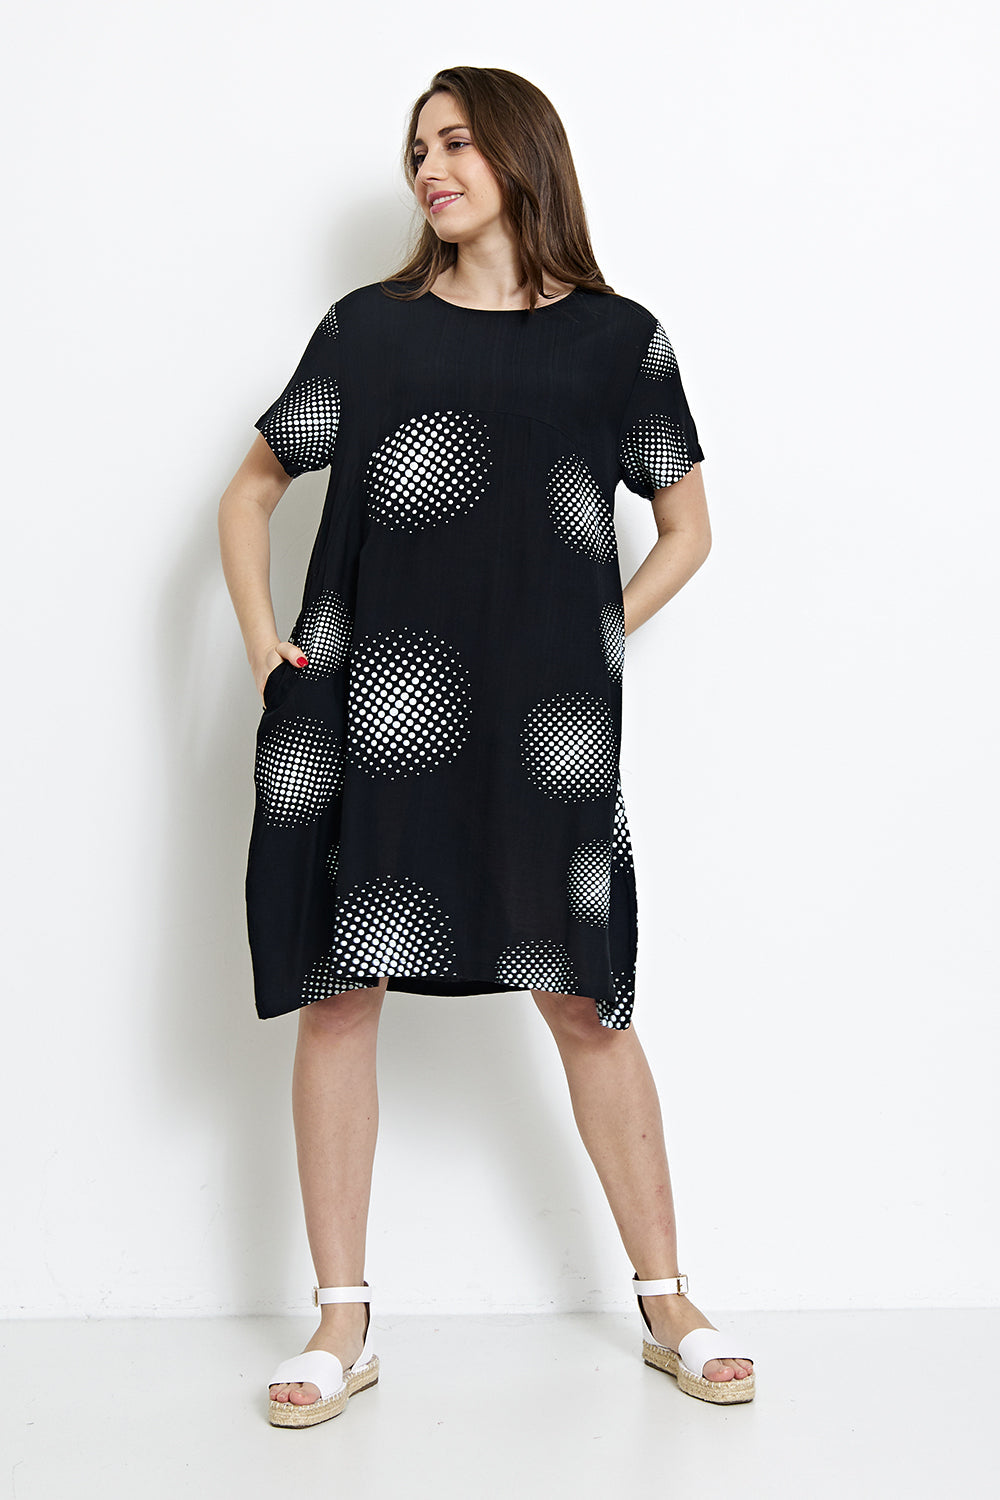 Dotted pattern short dress